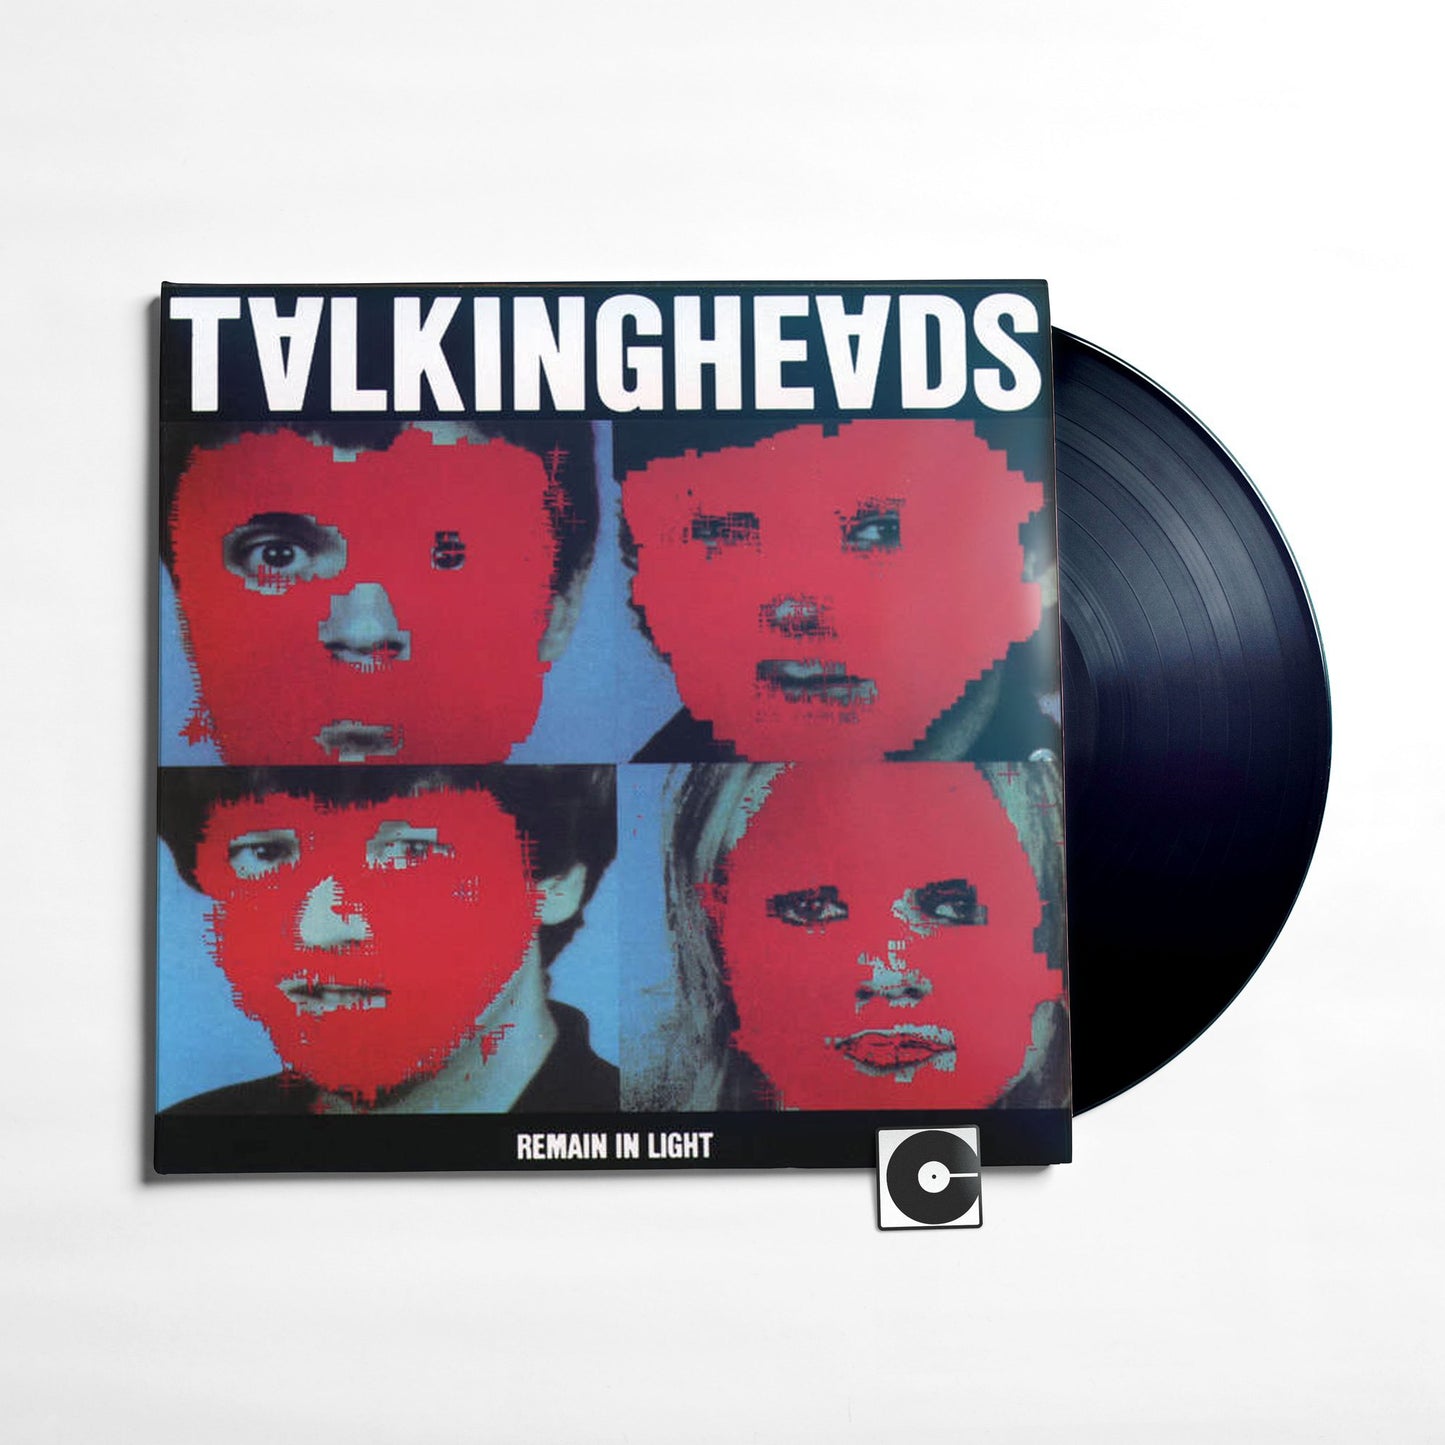 Talking Heads - "Remain In Light"